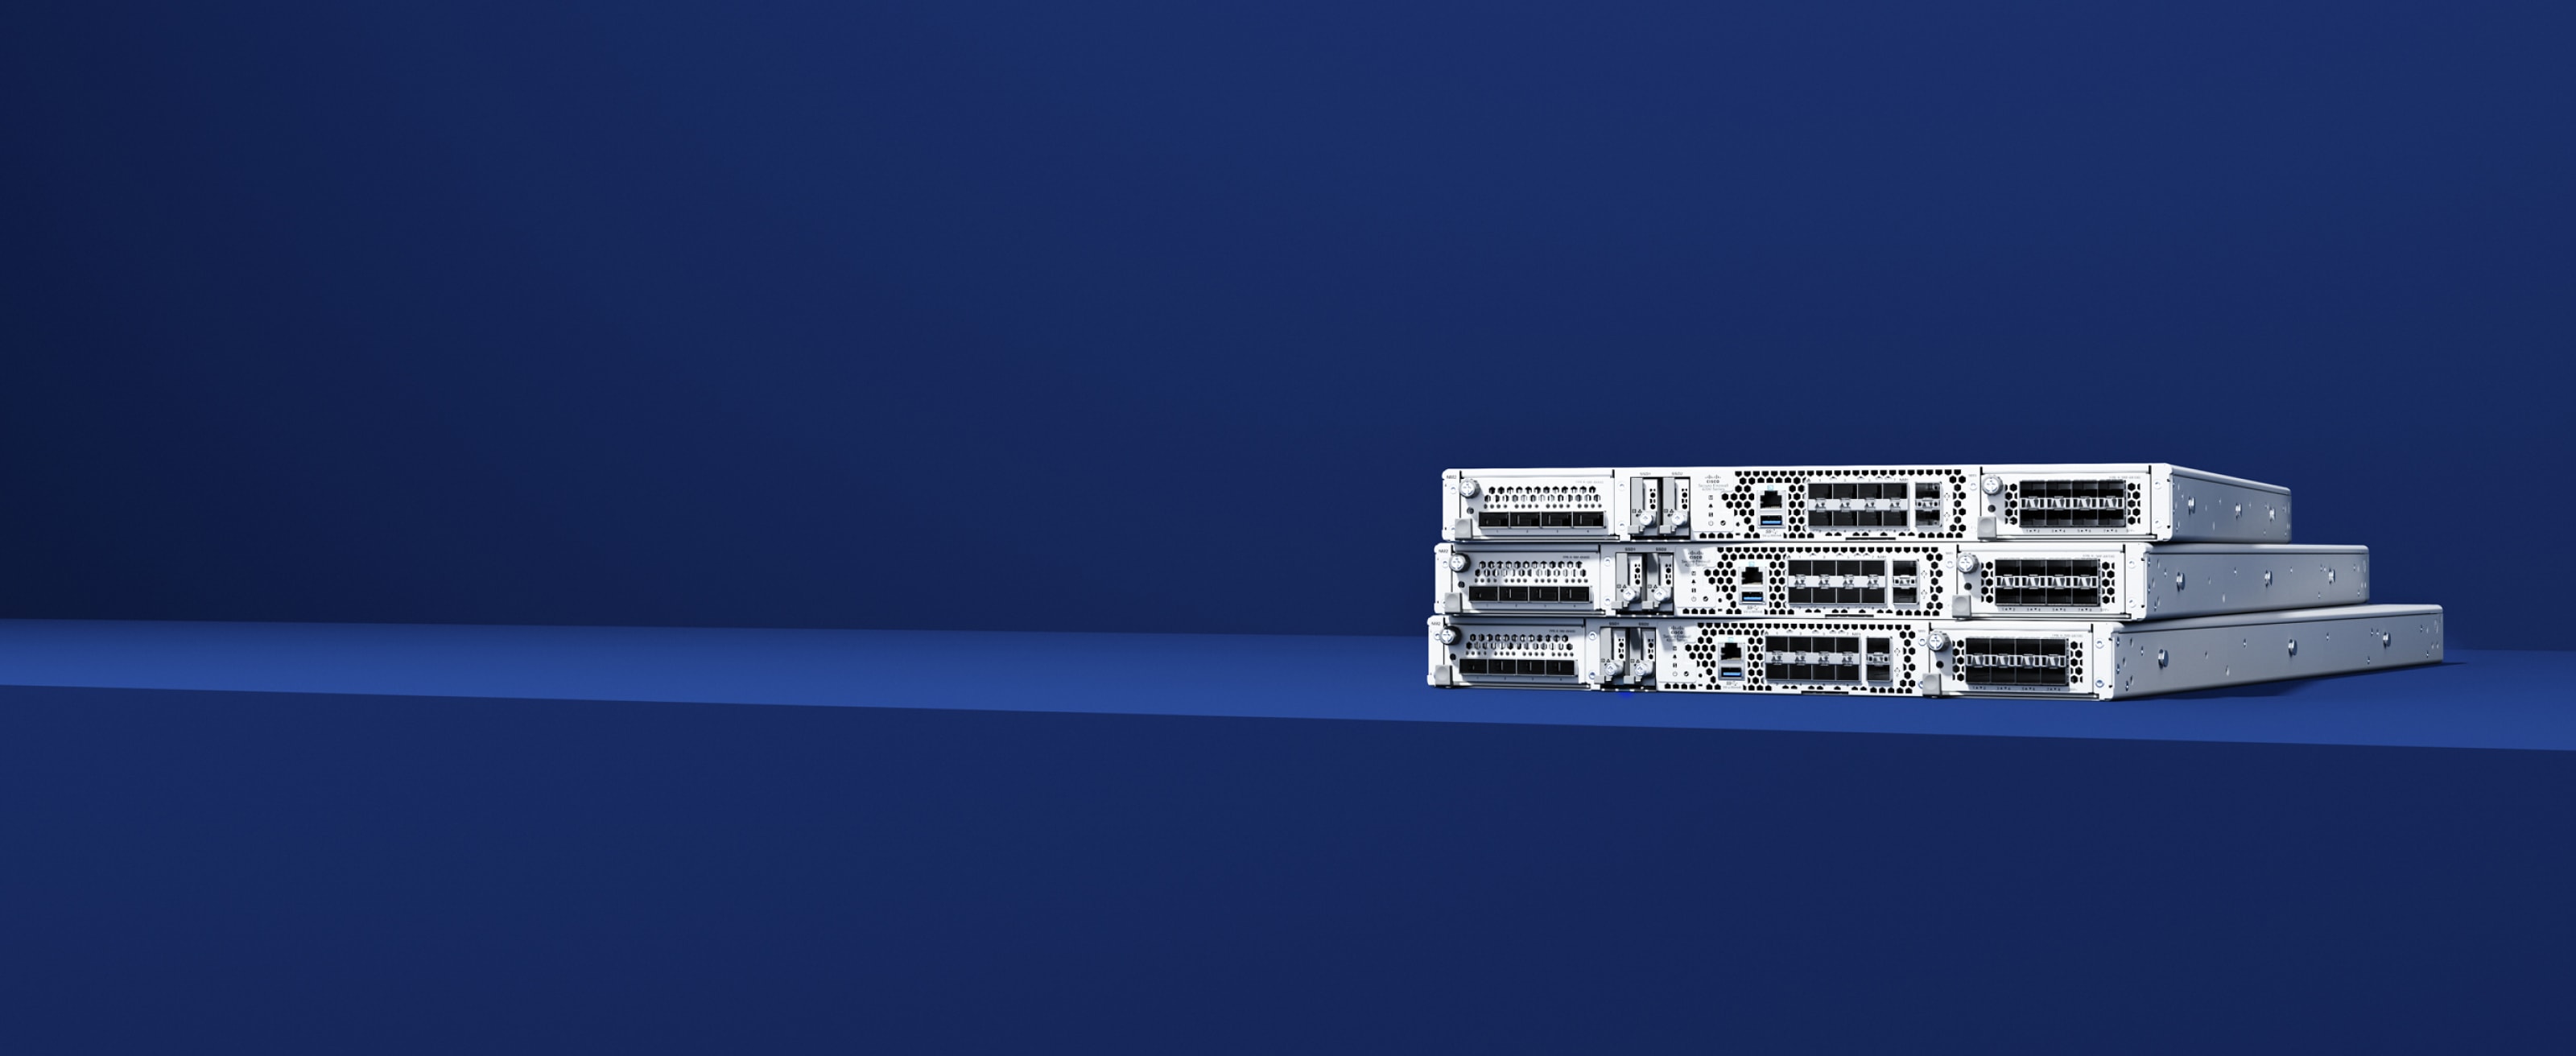 Cisco Secure Firewall 4200 Series